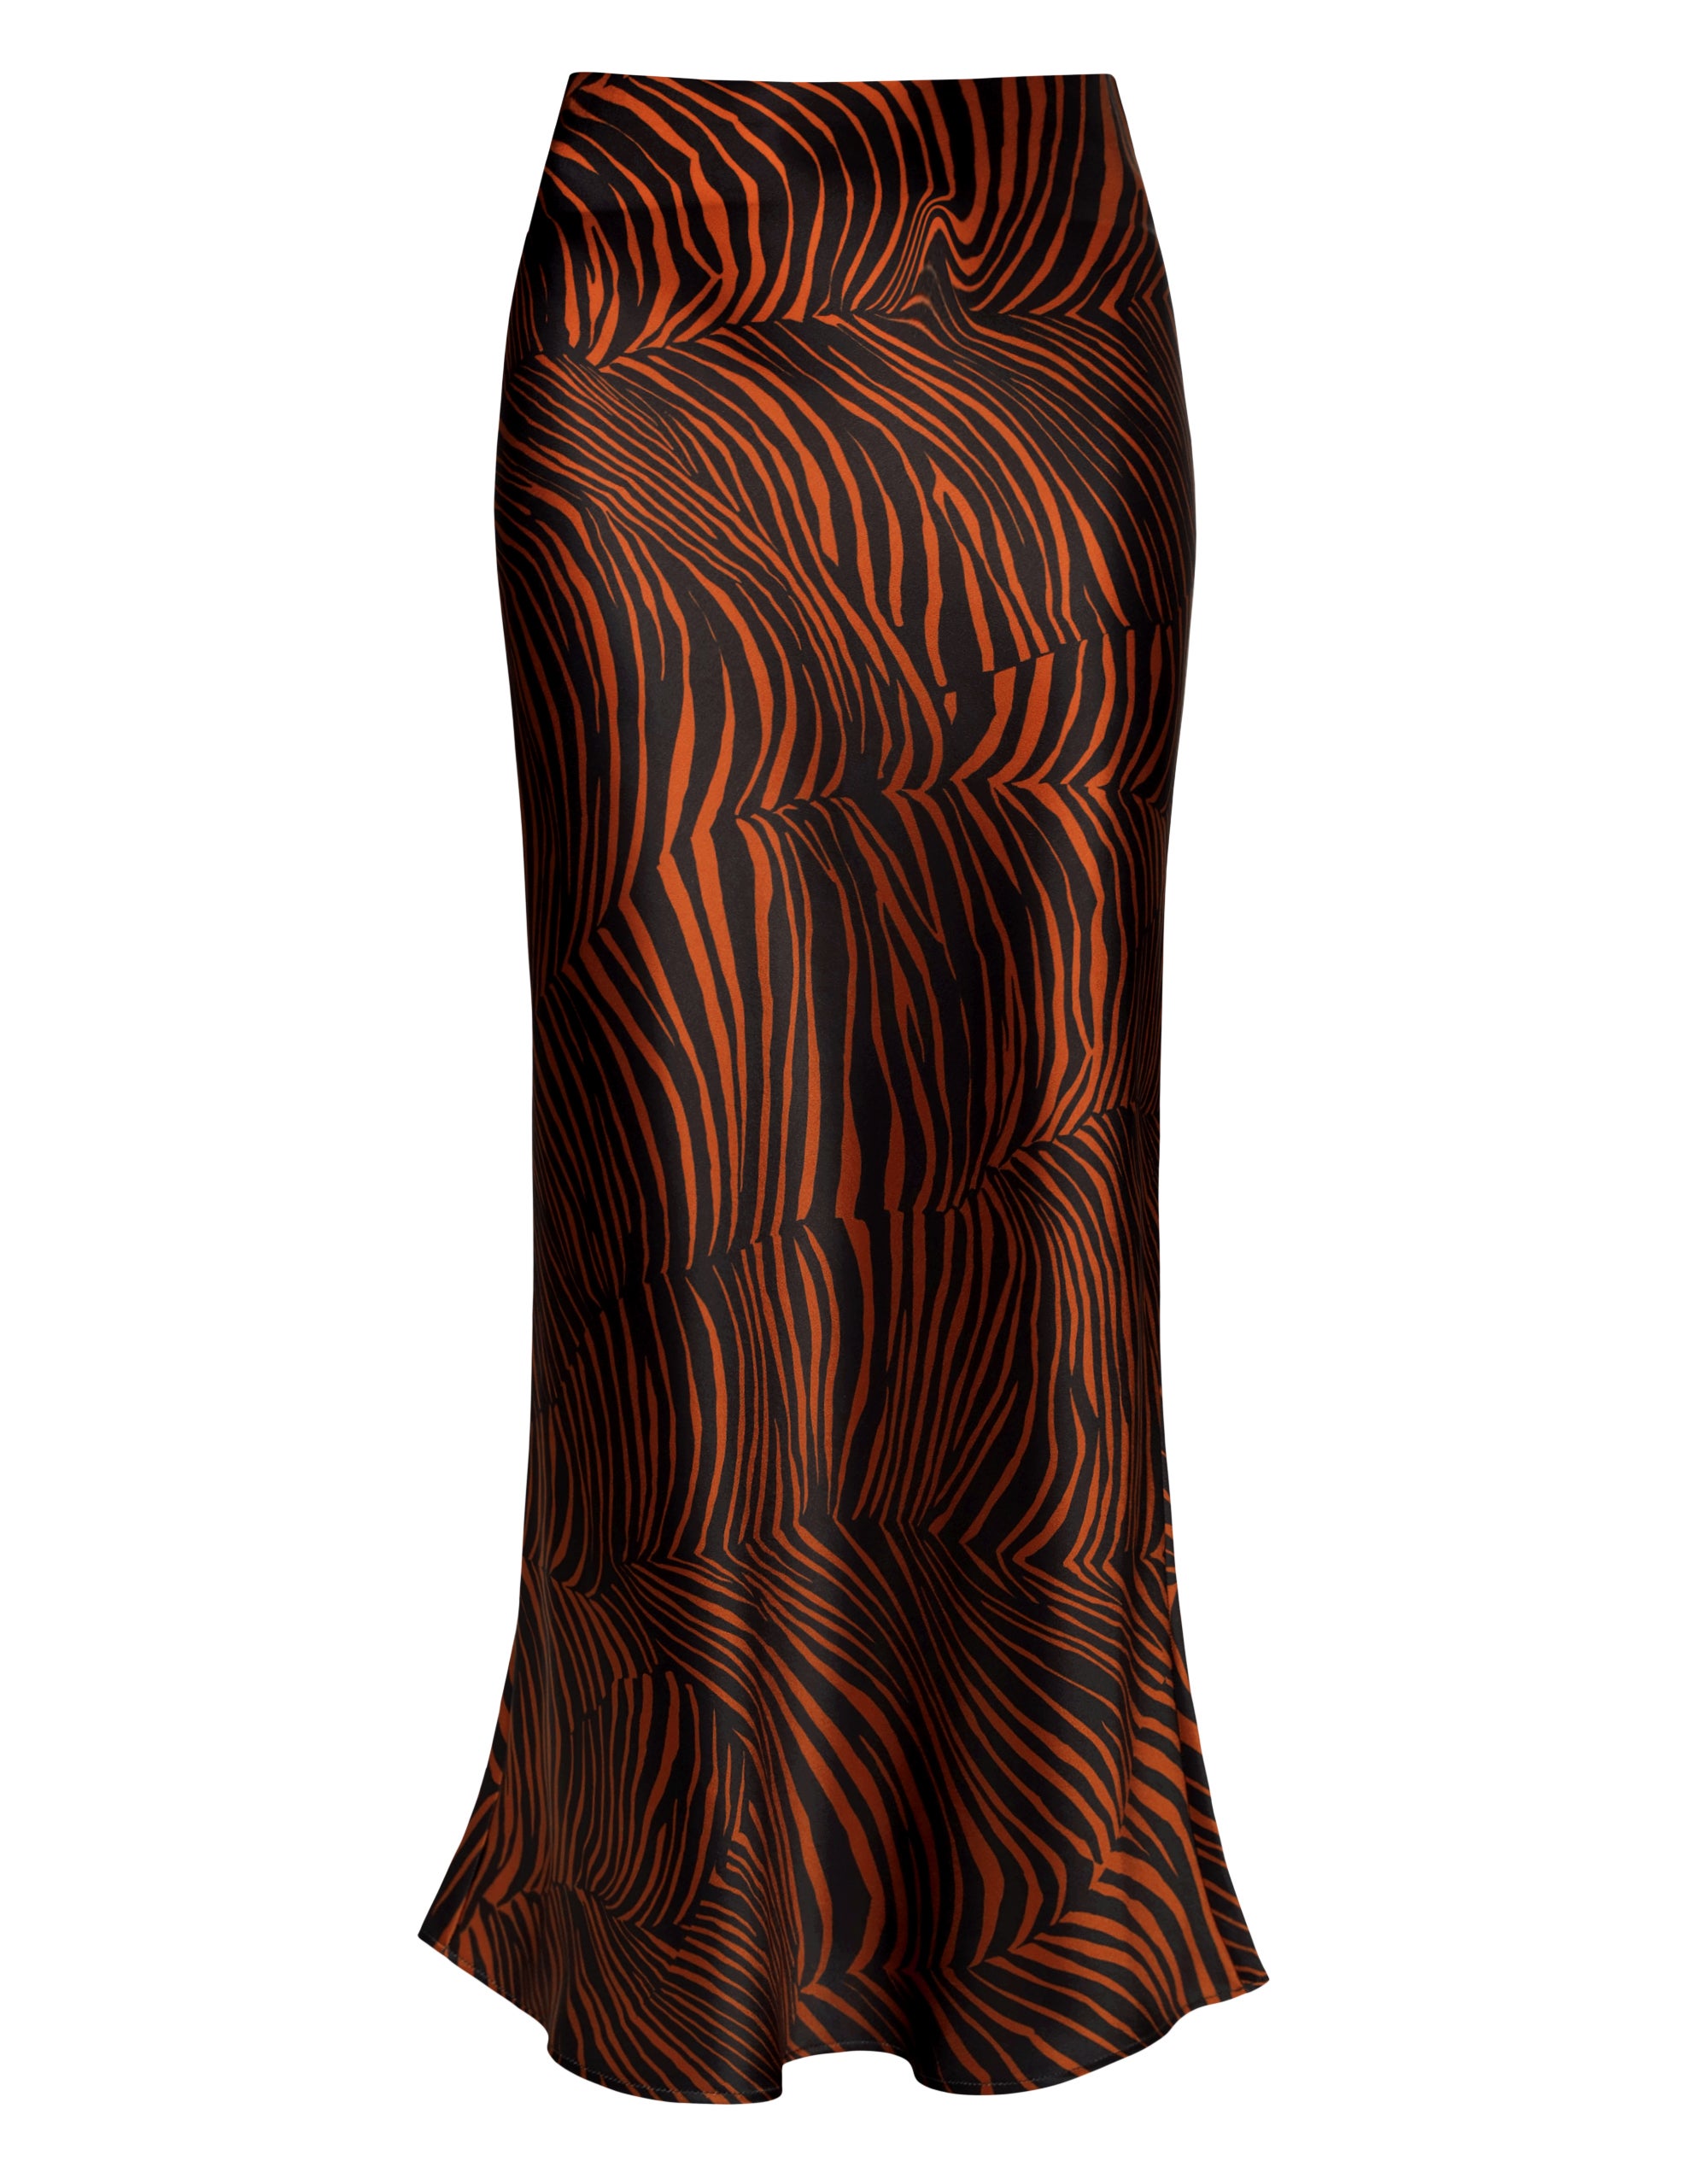 Tiger Print Satin Skirt